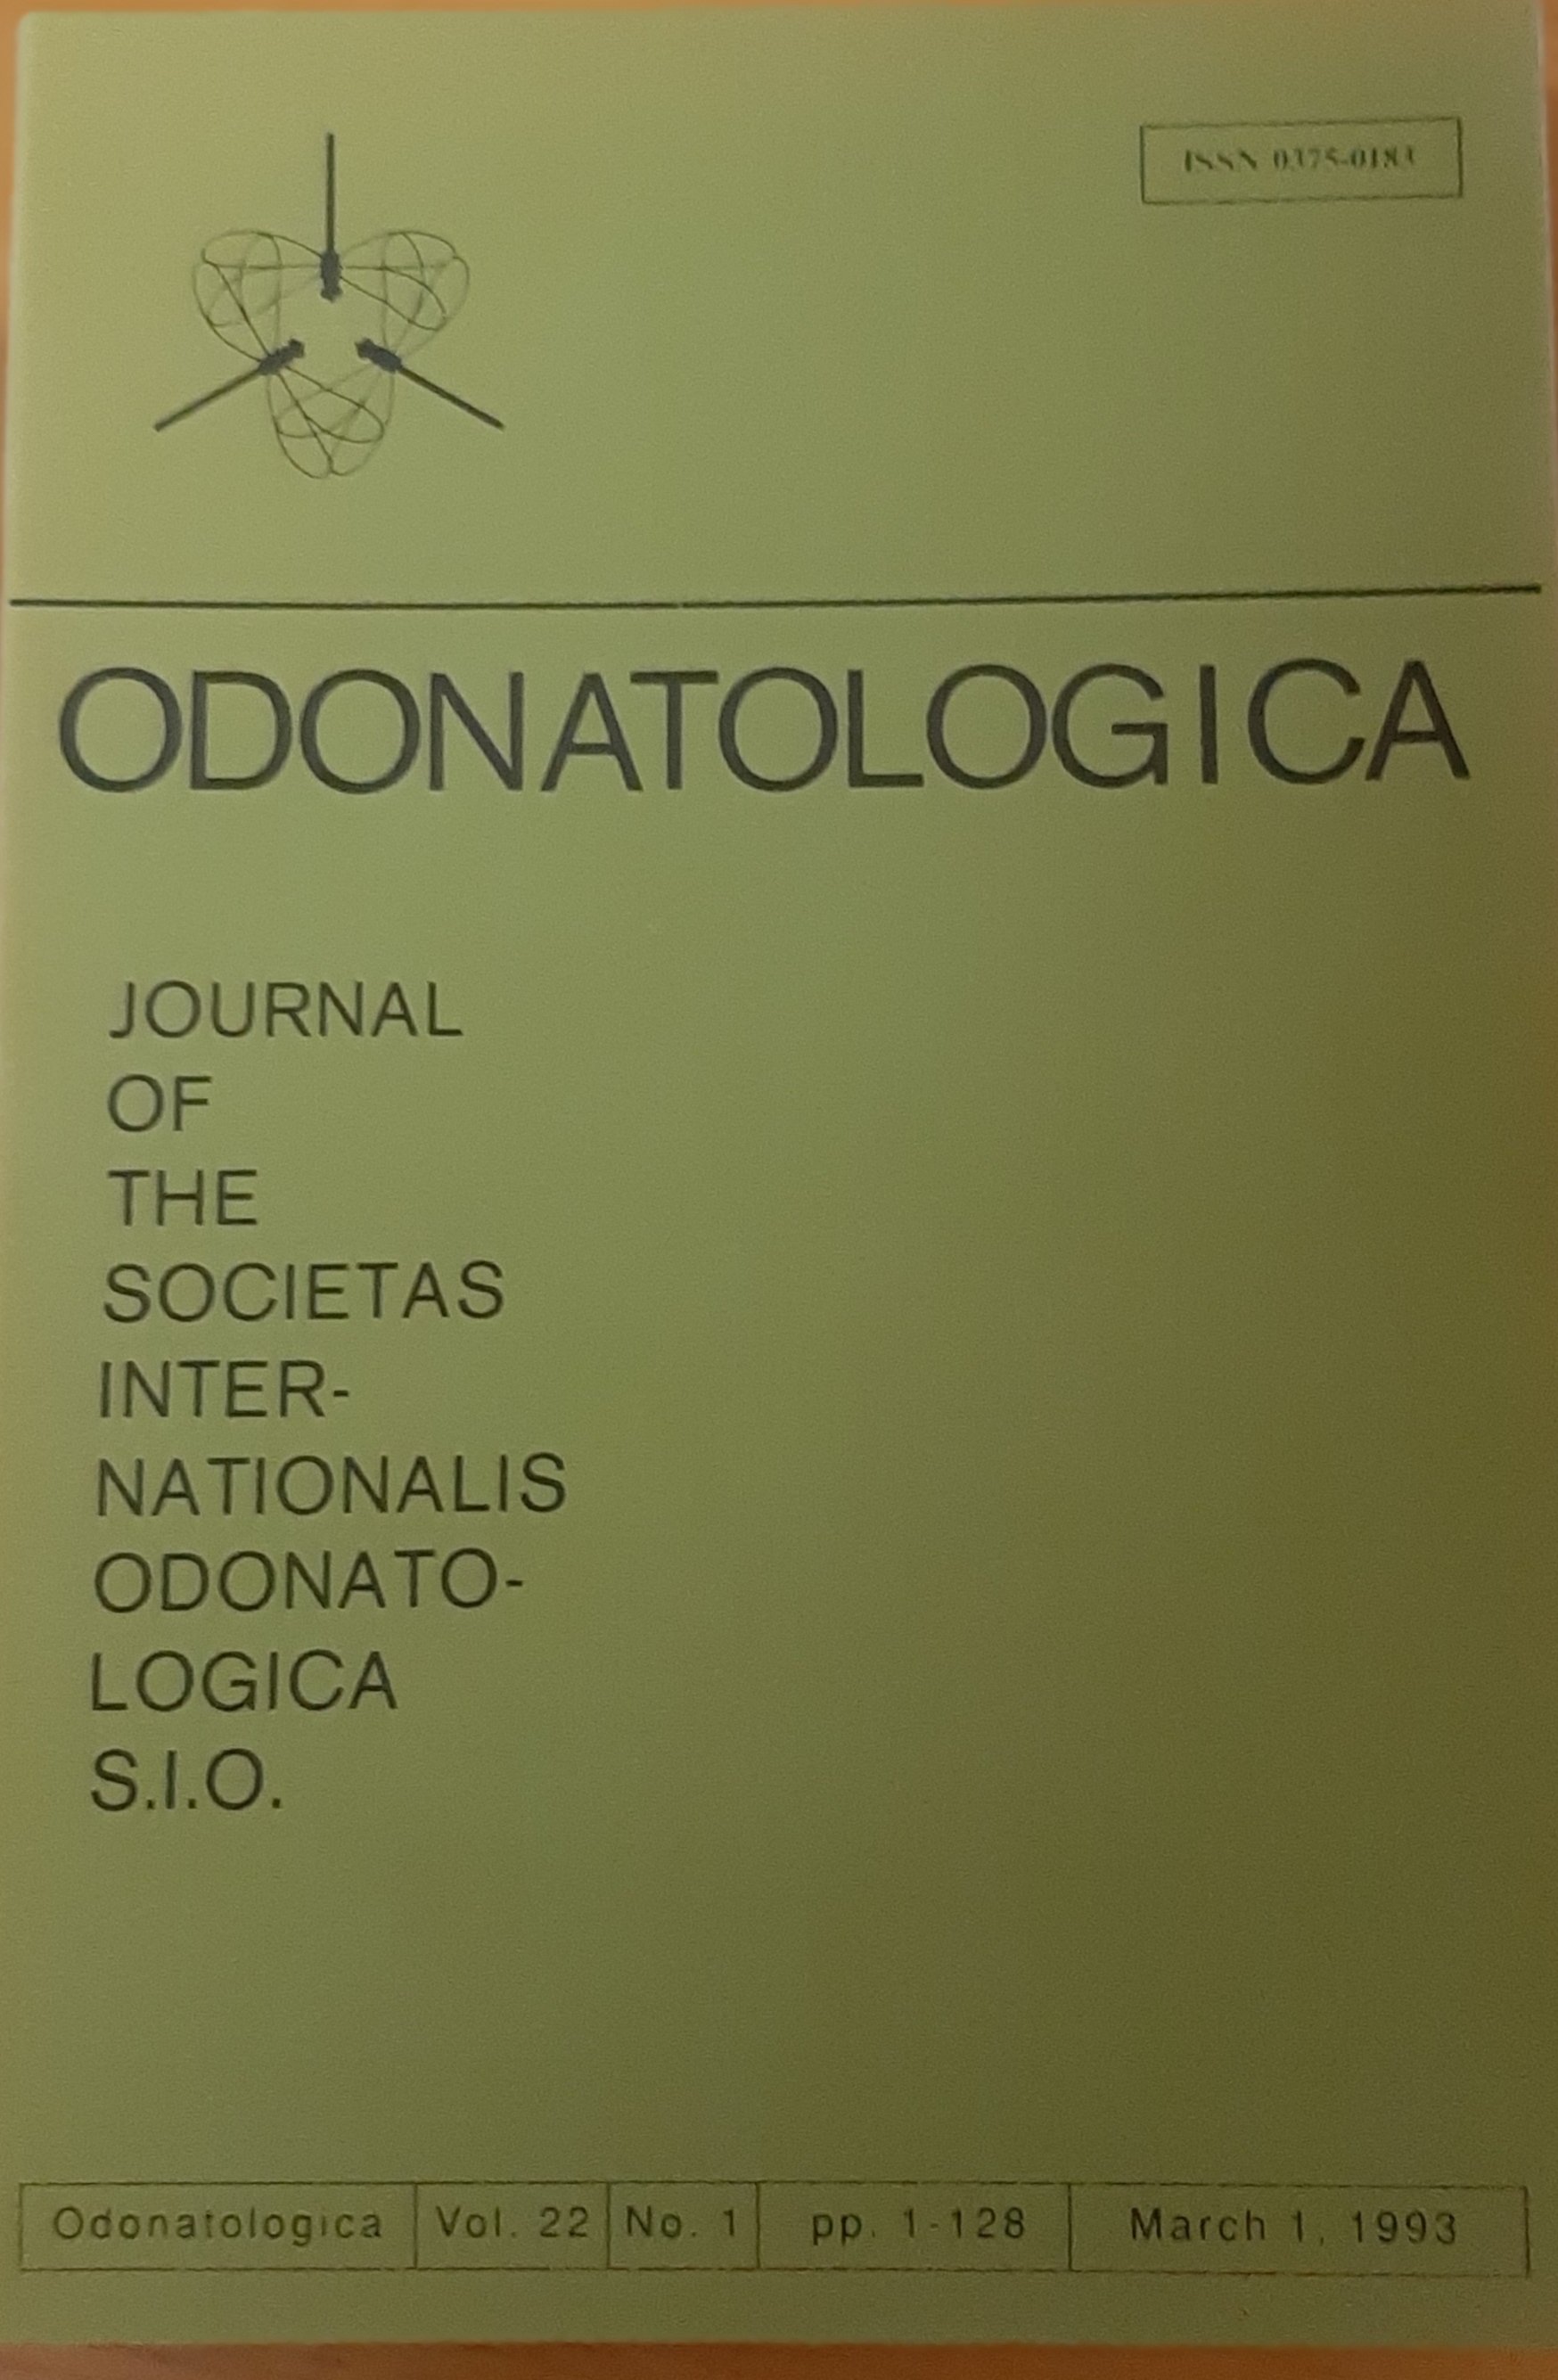 Odonatologica 1993/22. évf. 1. szám Journal of the Societas Internationalis Odonatologica S.I.O. (Rippl-Rónai Múzeum RR-F)